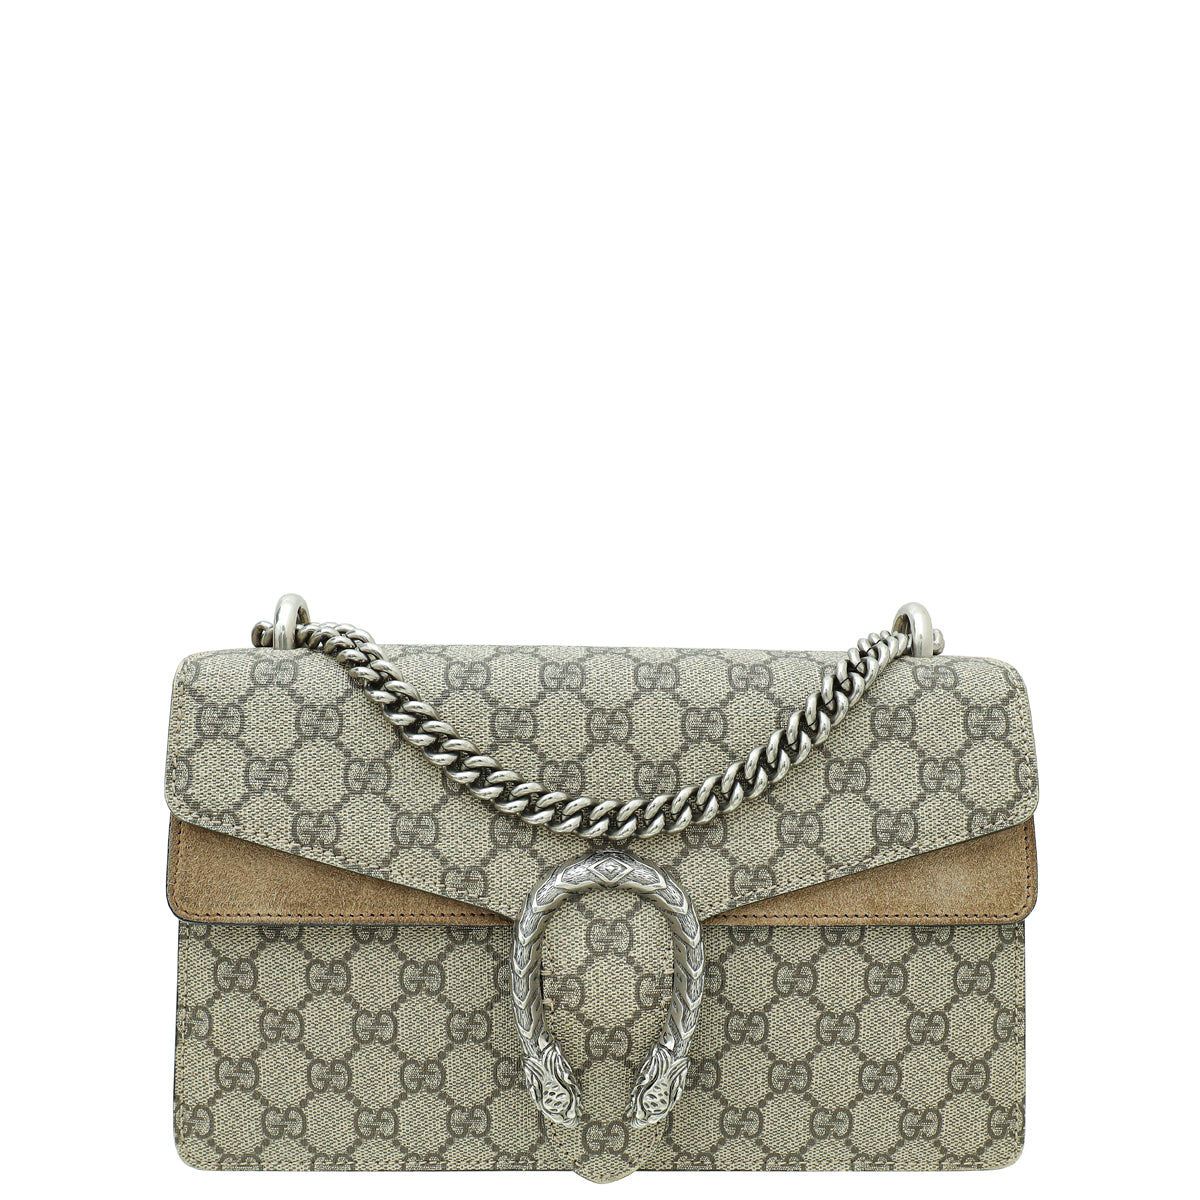 Gucci Bicolor GG Supreme Dionysus Small Shoulder Bag